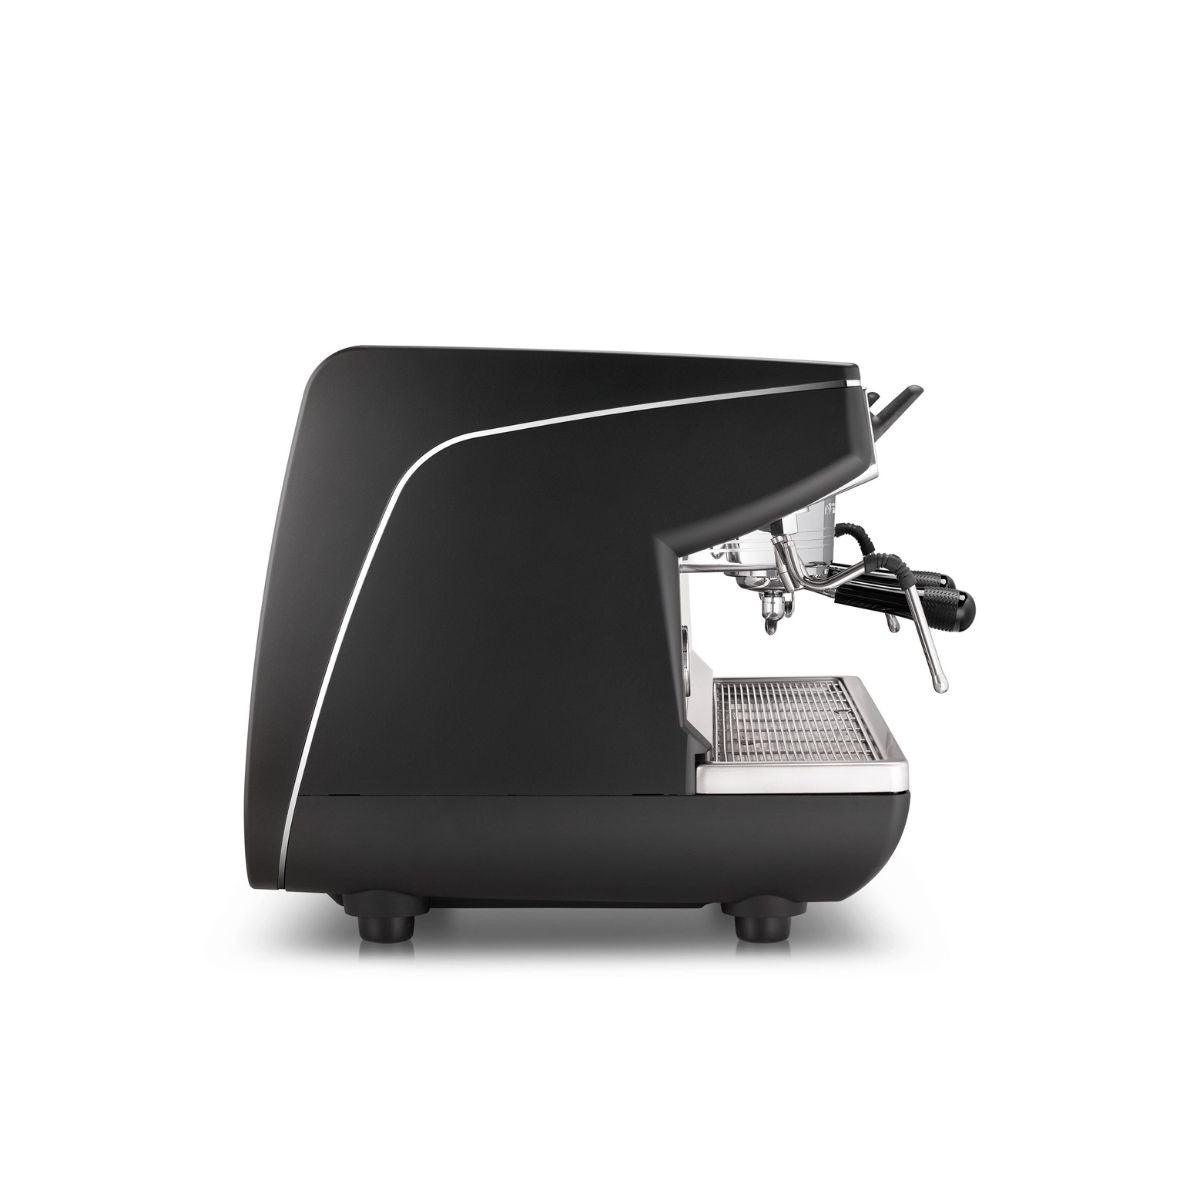 Casadio Undici - A3 Commercial Espresso Machine